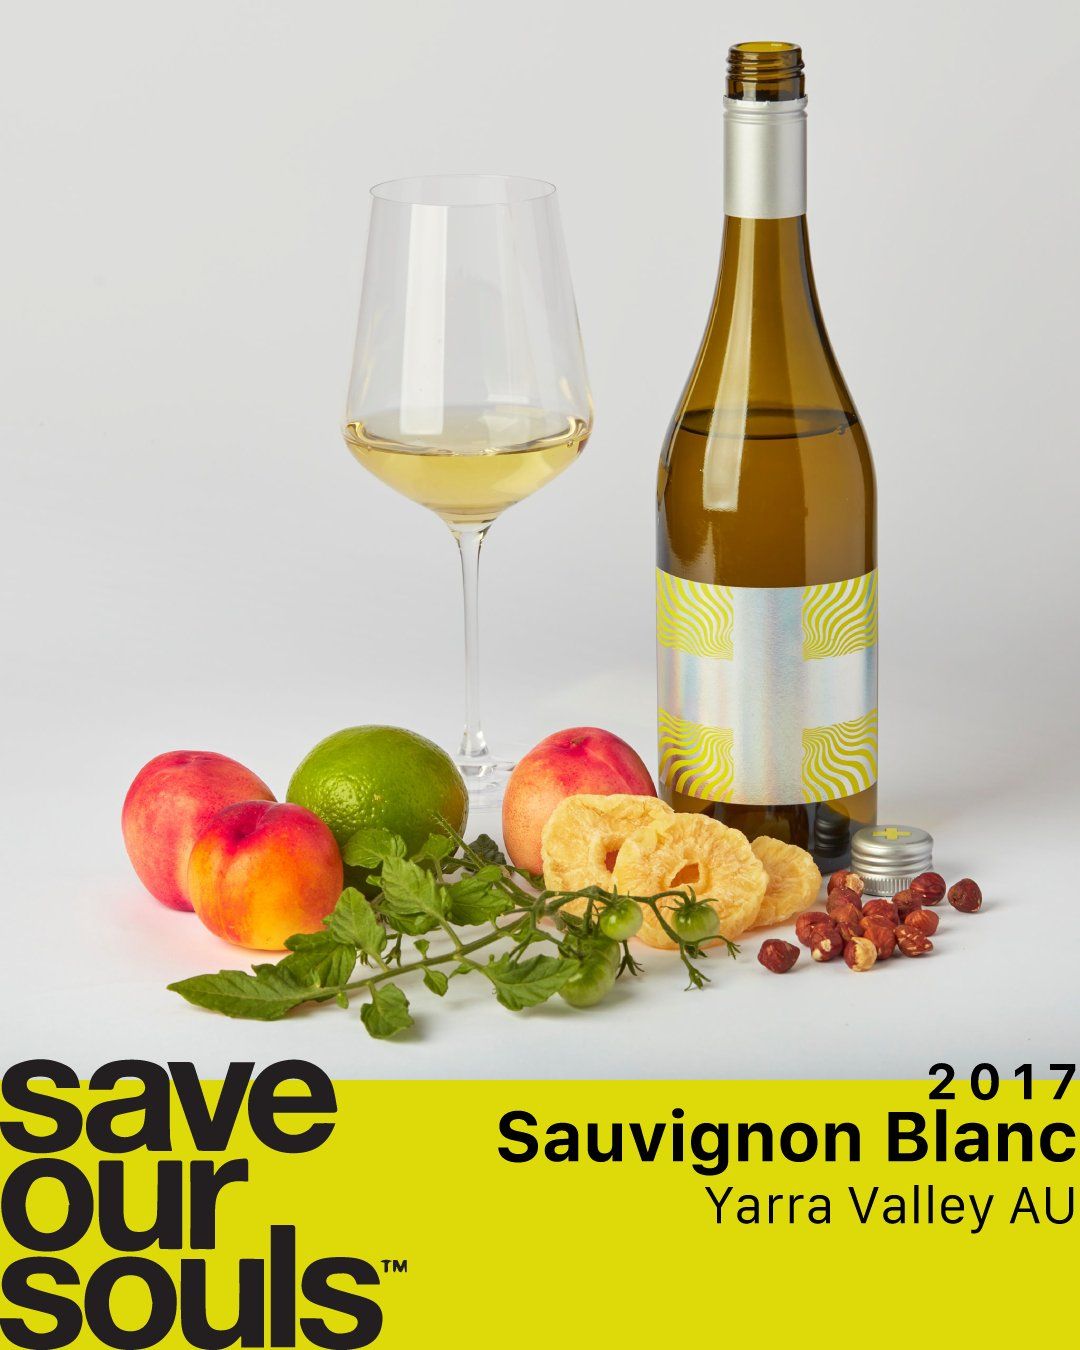 Save Our Souls 2017 SAUVIGNON BLANC